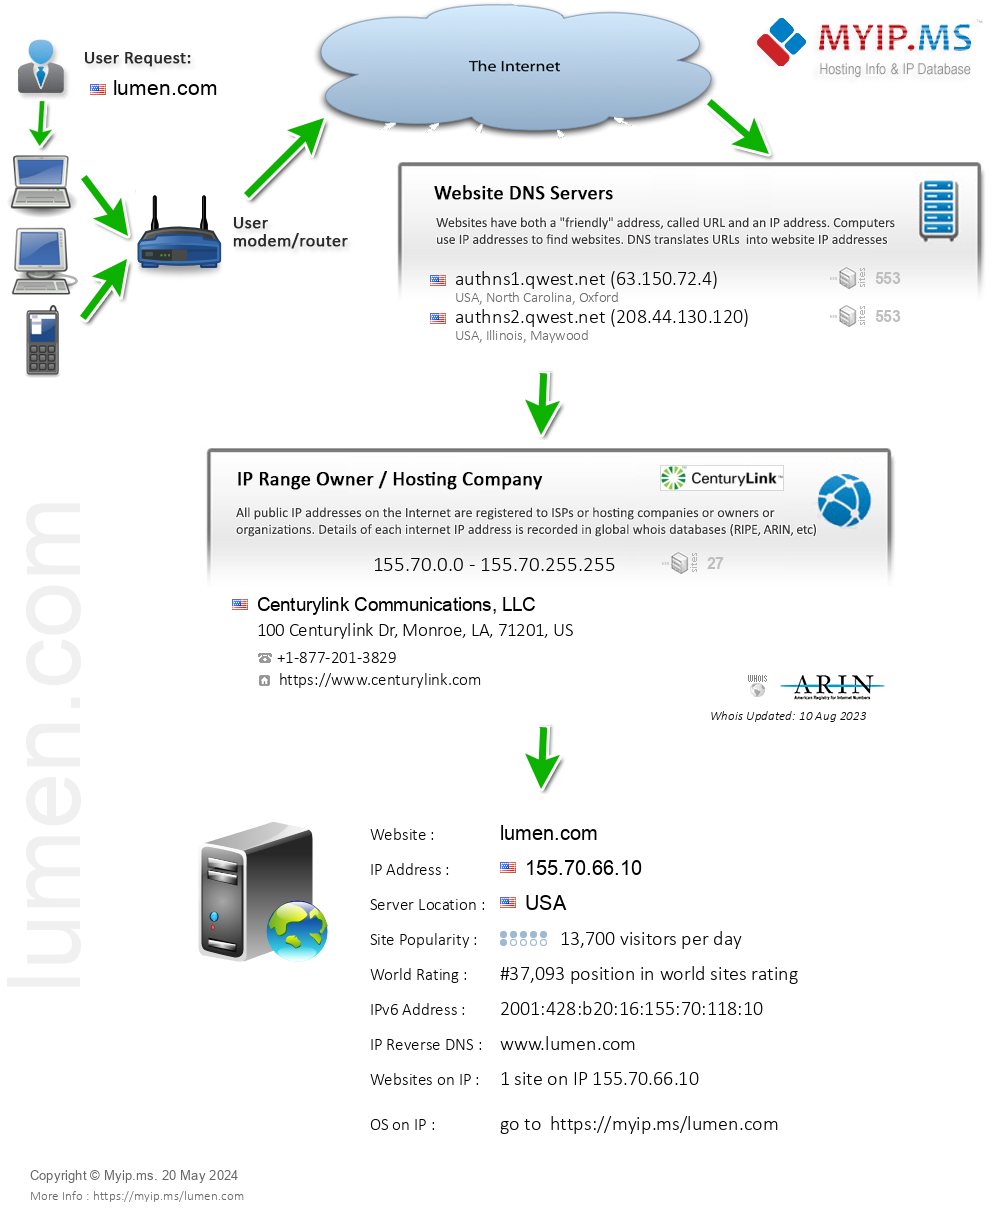 Lumen.com - Website Hosting Visual IP Diagram